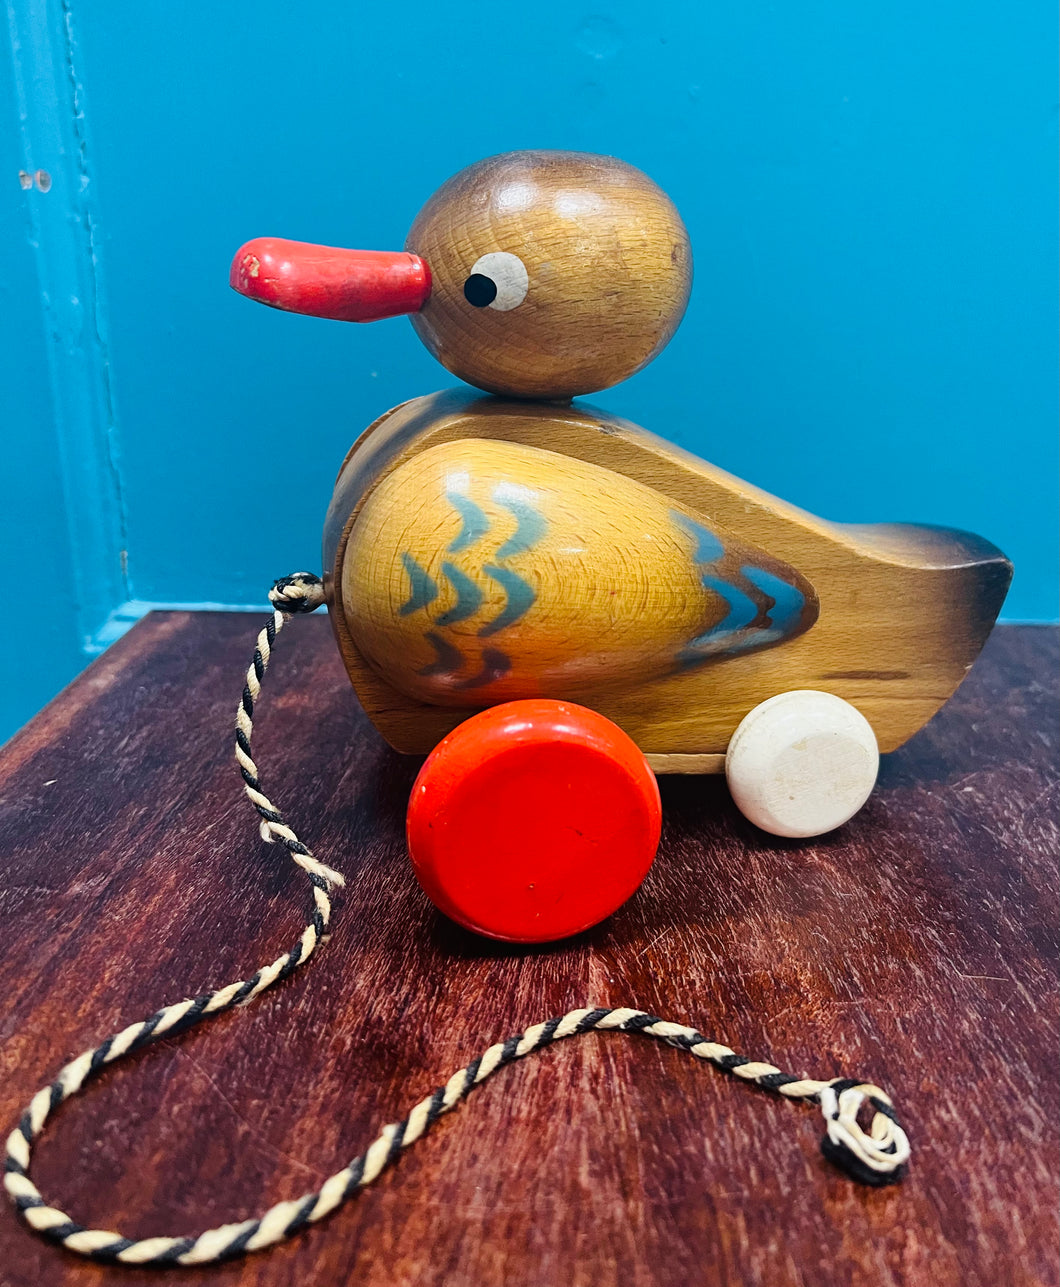 Tegan tynnu Retro o’r 70au  siâp chwaden  / Retro duck shaped pull along toy from the 70s